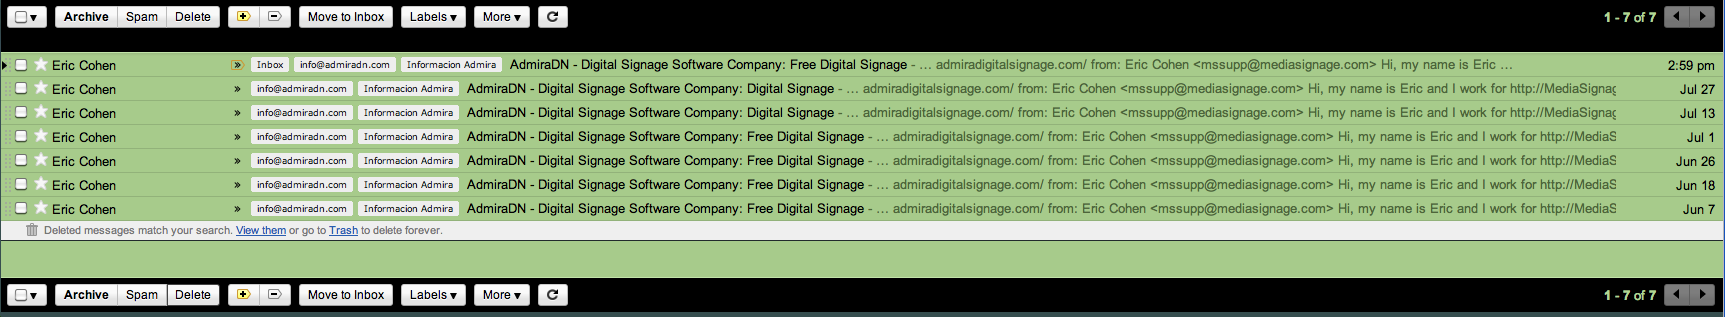 Mediasignage digital signage spam